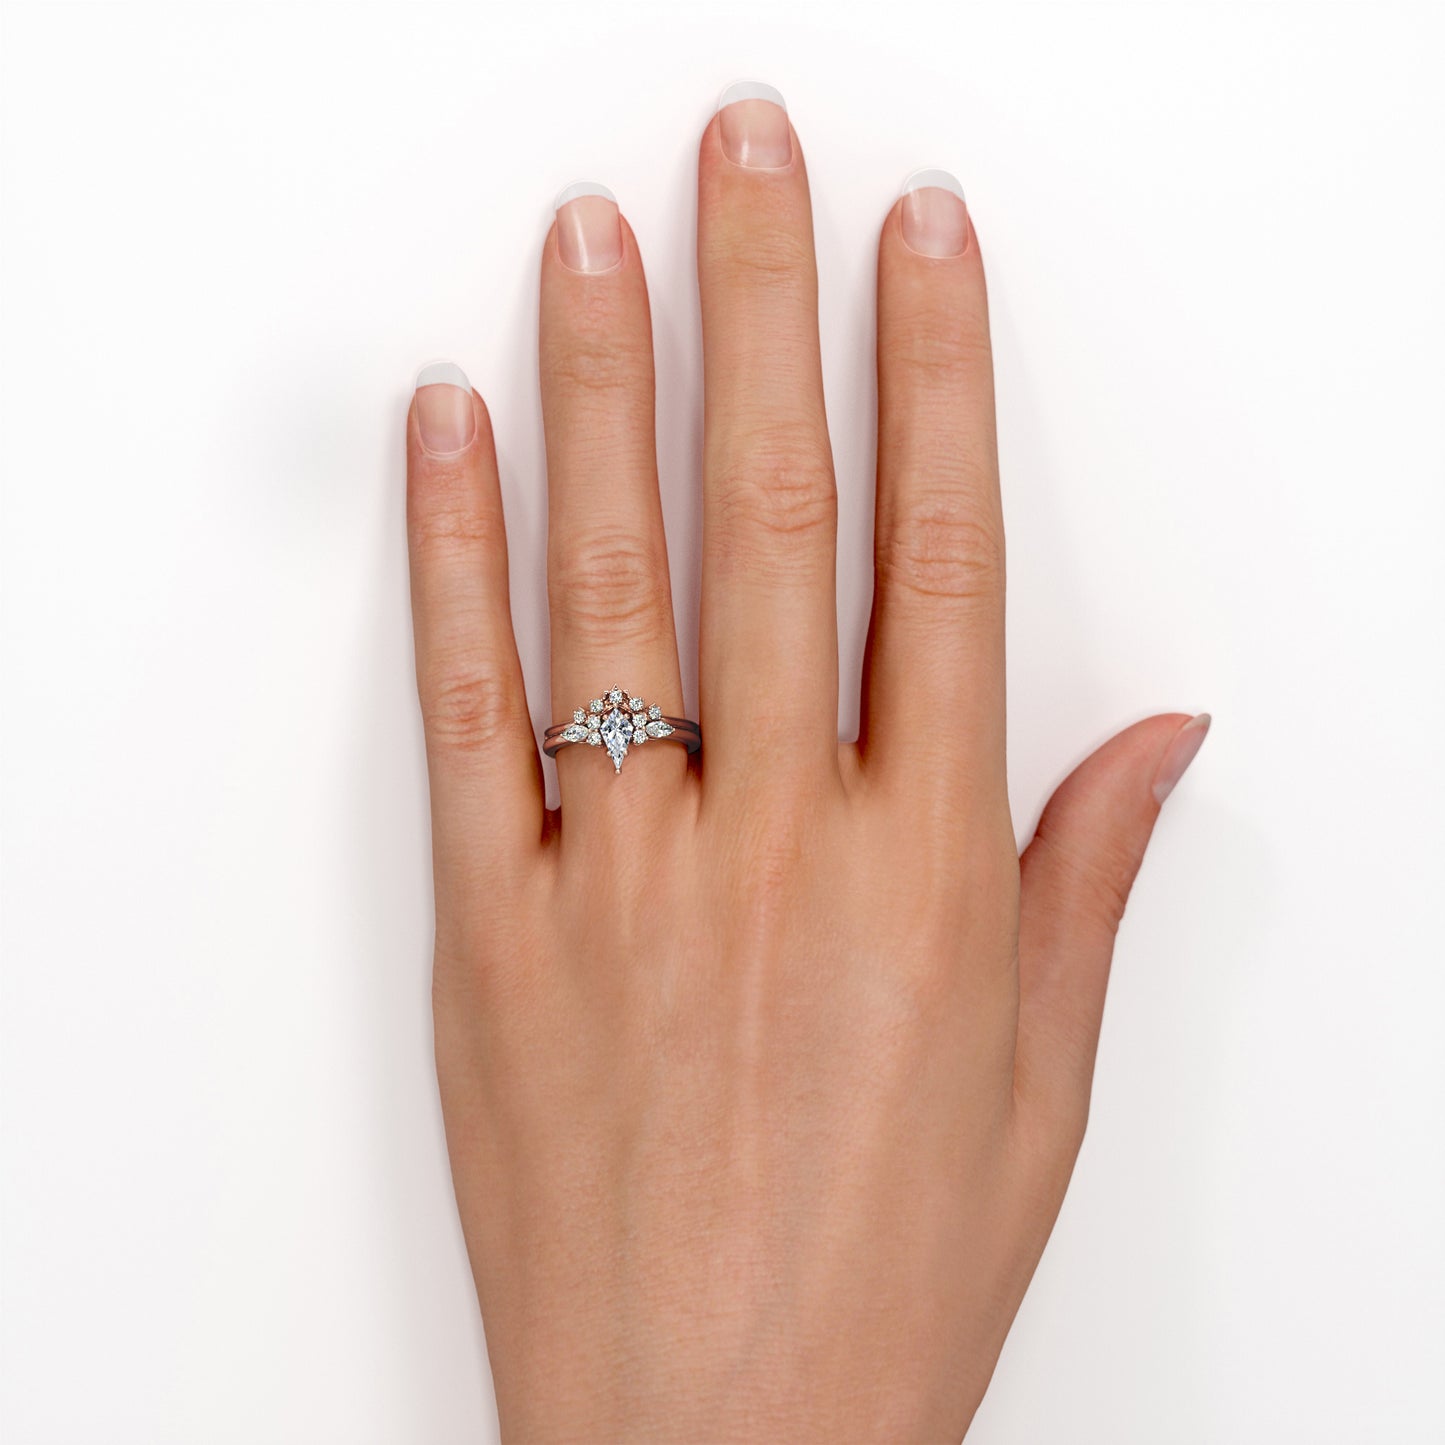 Vintage Royal inspired 1.35 carat Kite shaped Moissanite and diamond art deco wedding ring set in White gold